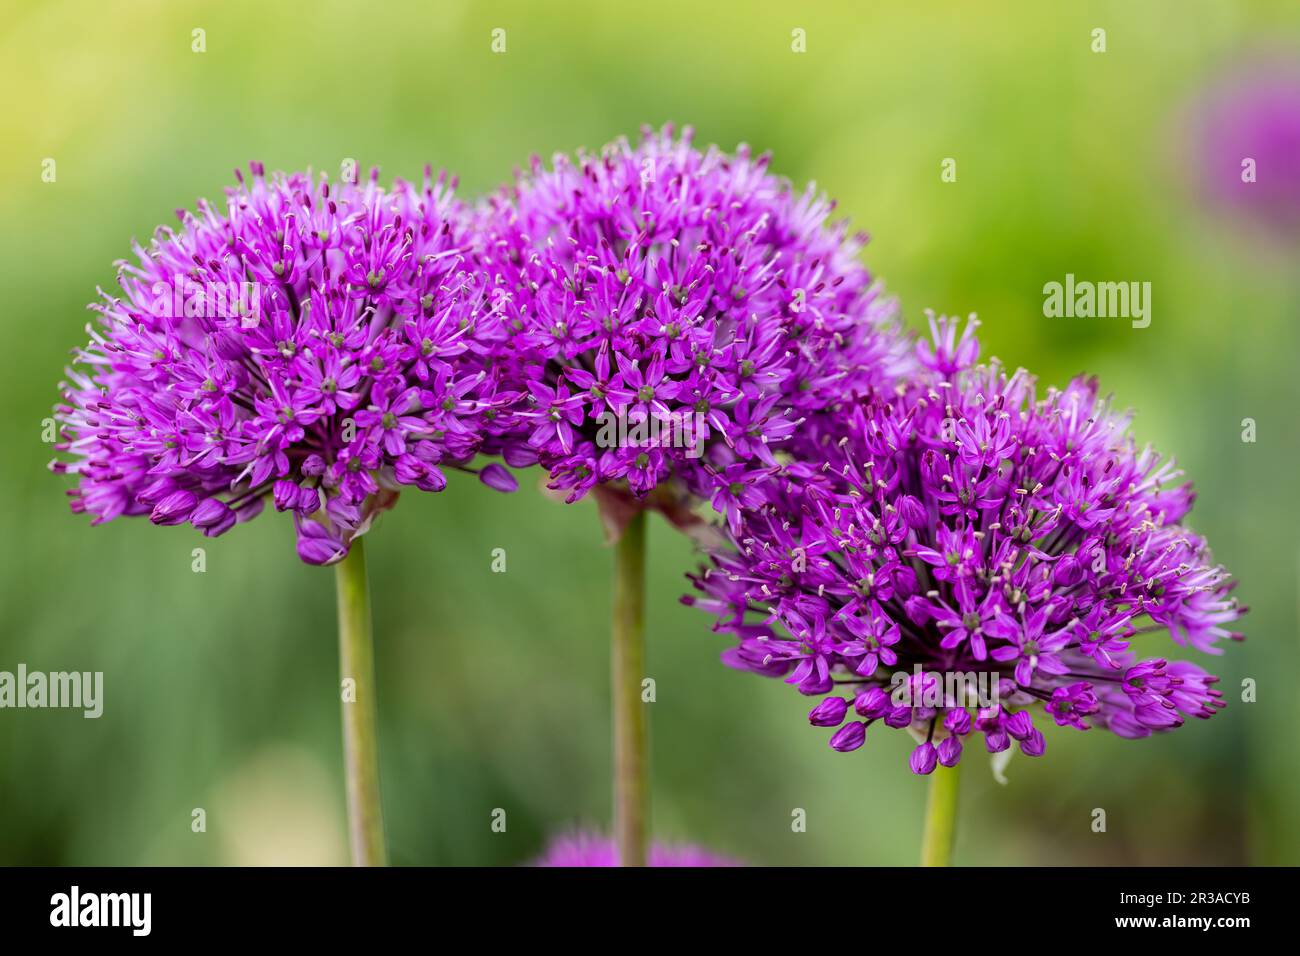 Allium Cristophii flowerheads. Stock Photo